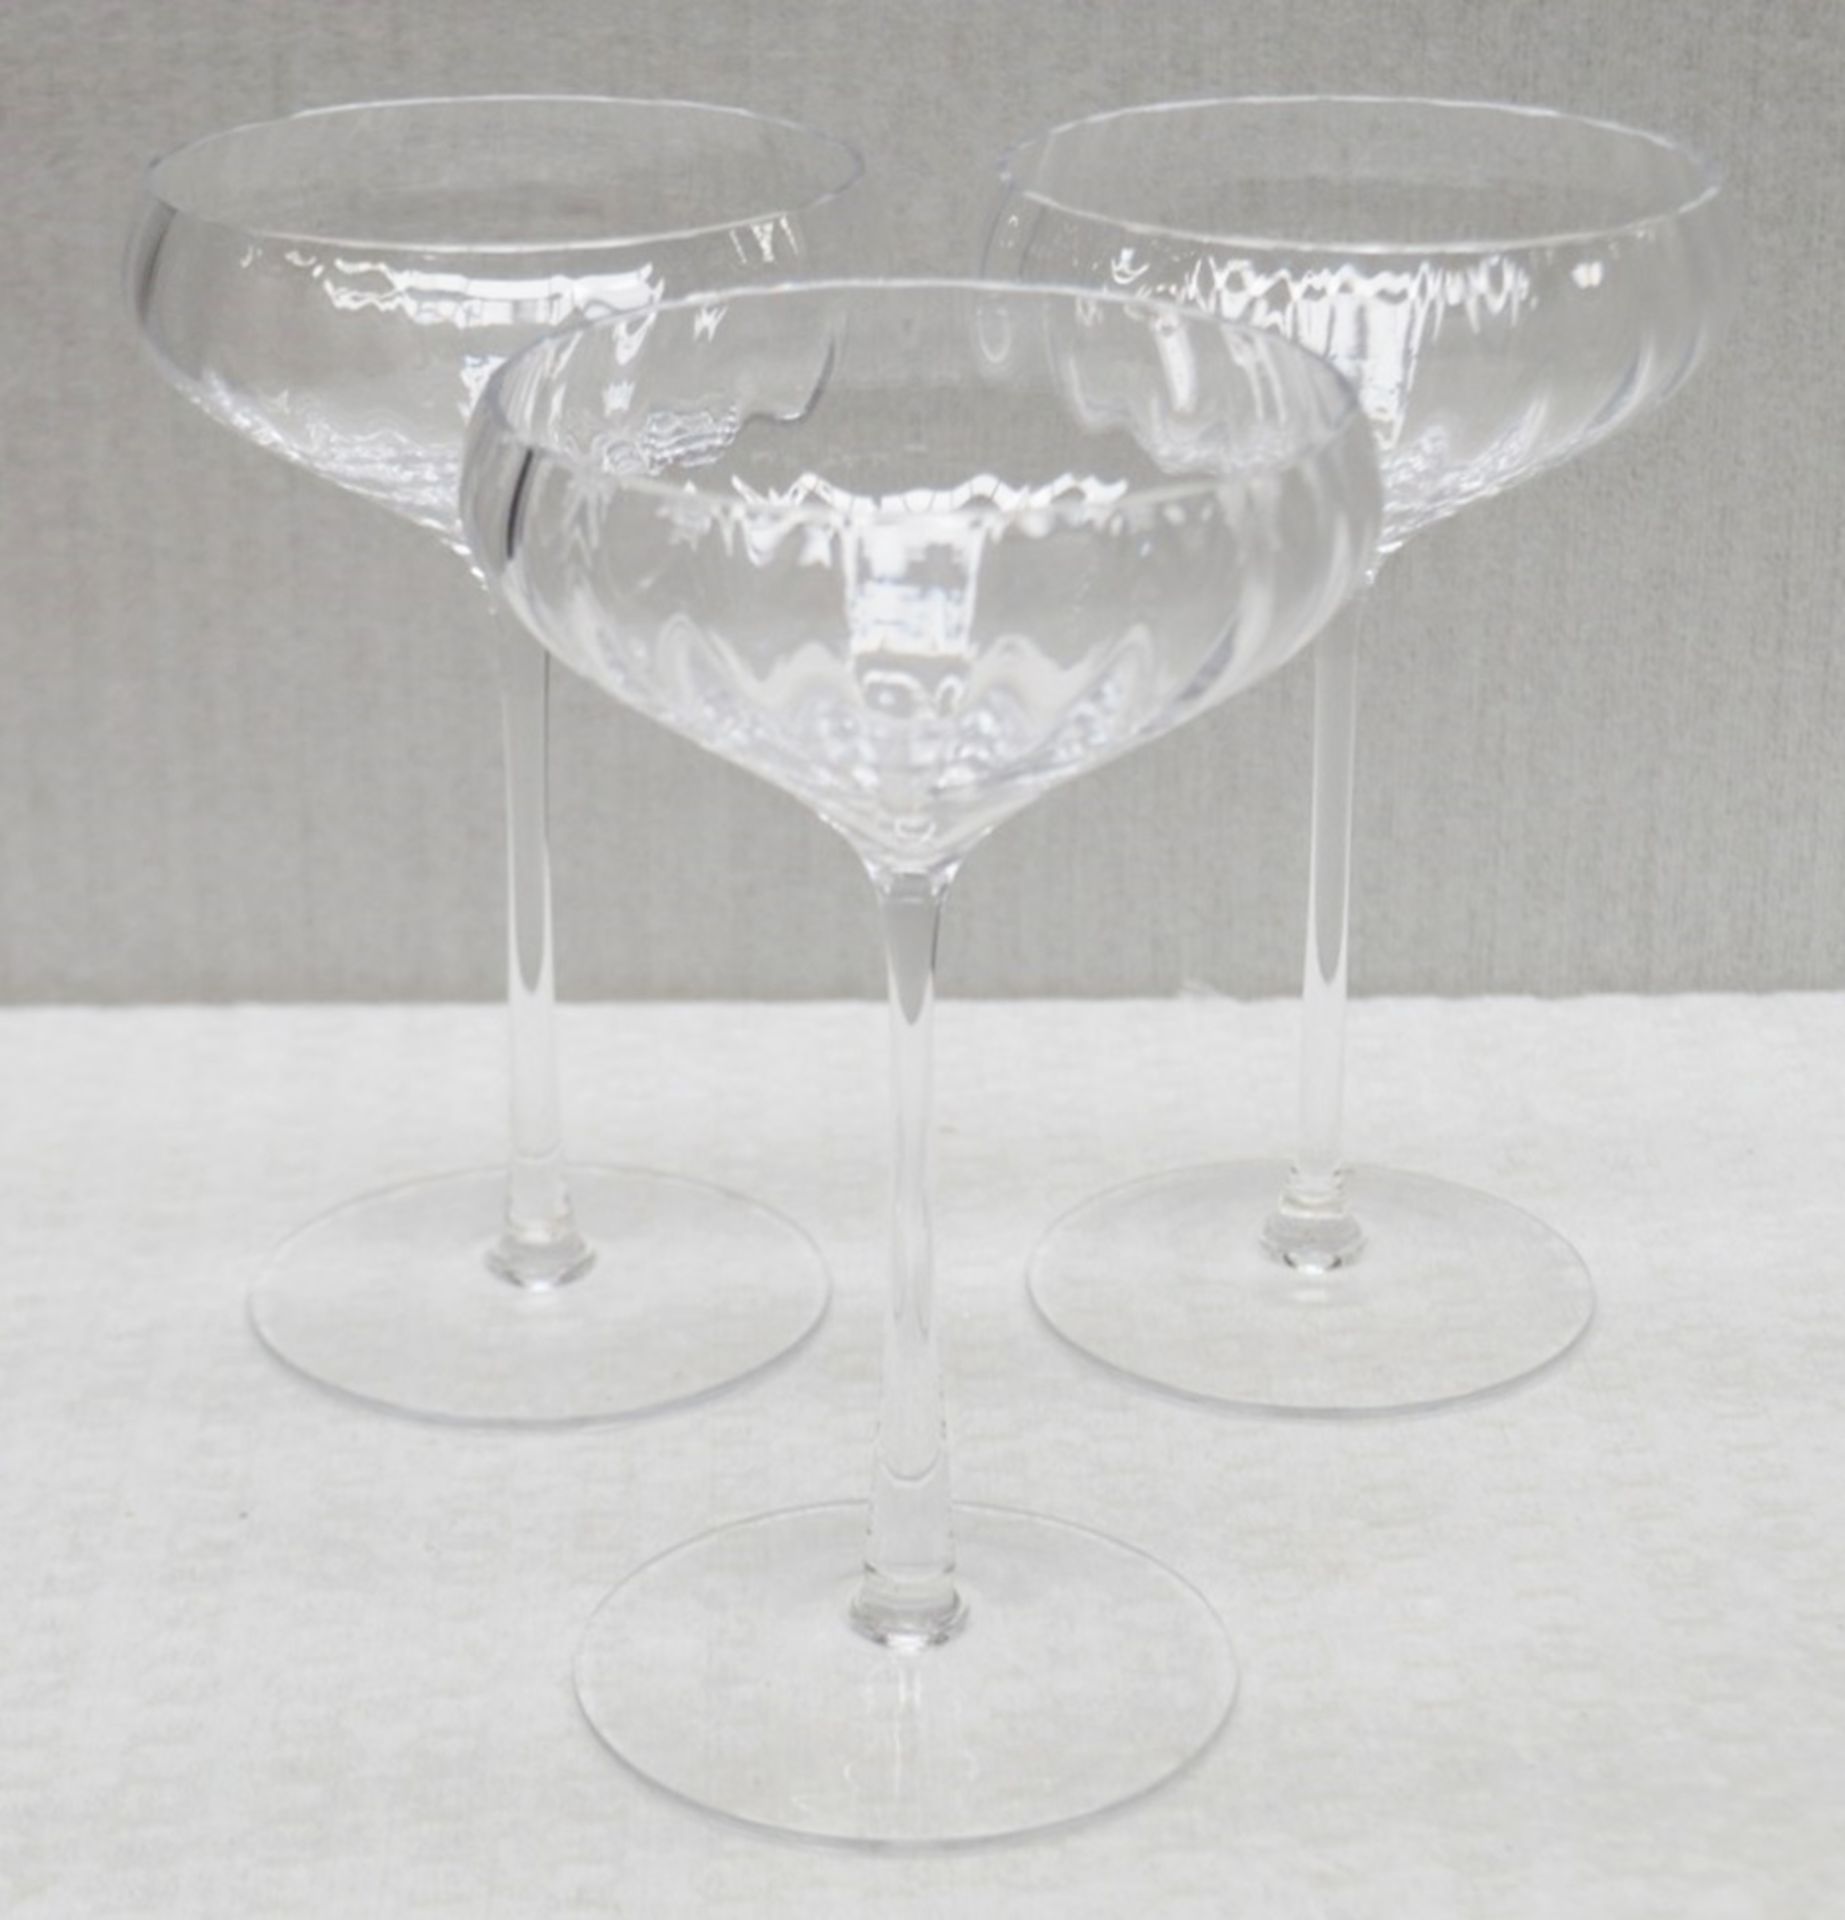 3 x Soho House Champagne Glasses Ref: HHW65/JUL21/PAL-B - CL011 - Location: Altrincham WA14More